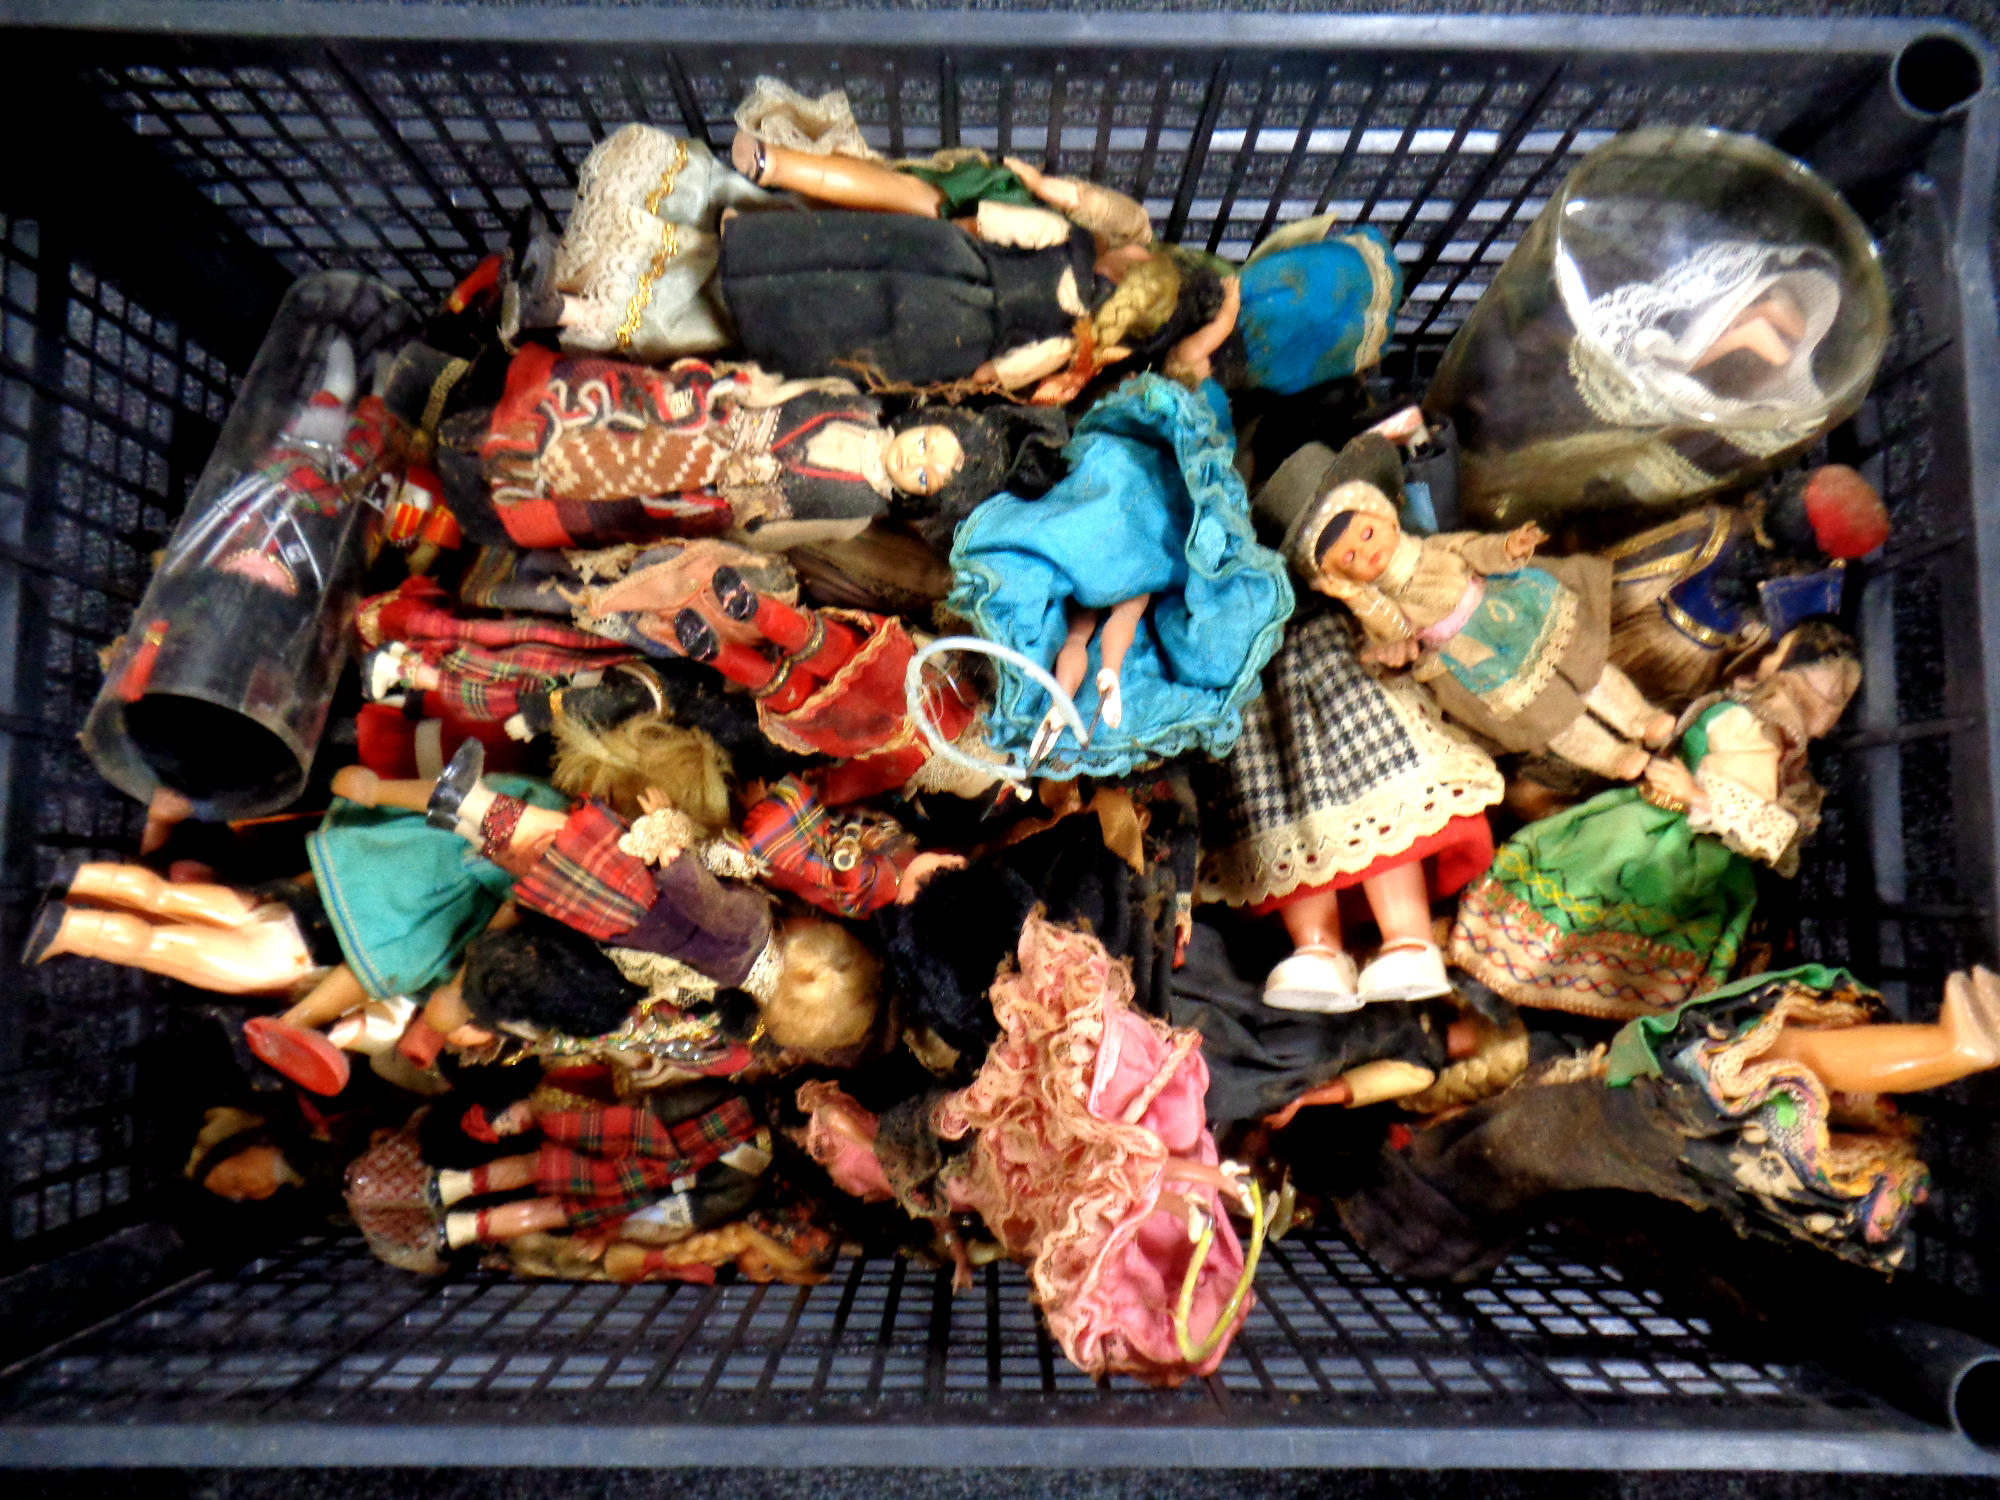 A crate of twentieth century dolls of the world